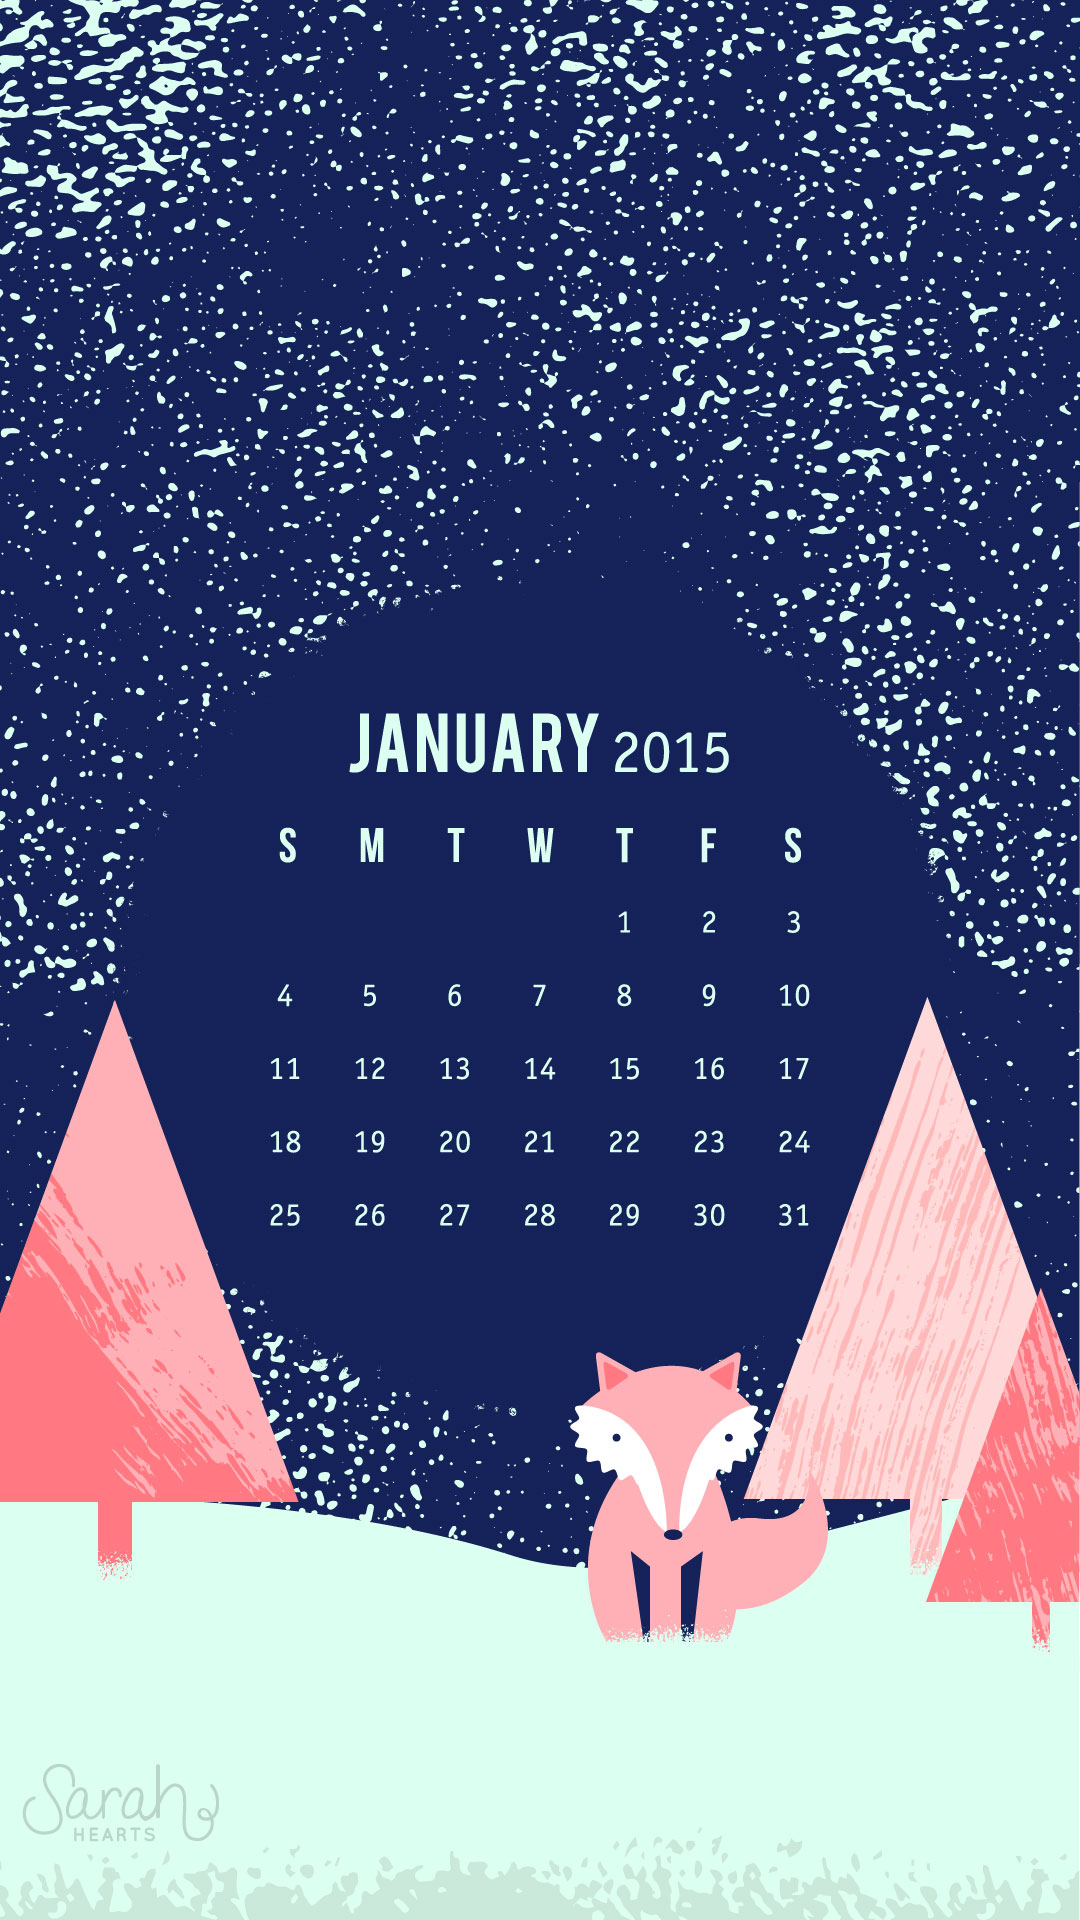 January 2015 Calendar Wallpaper - Sarah Hearts